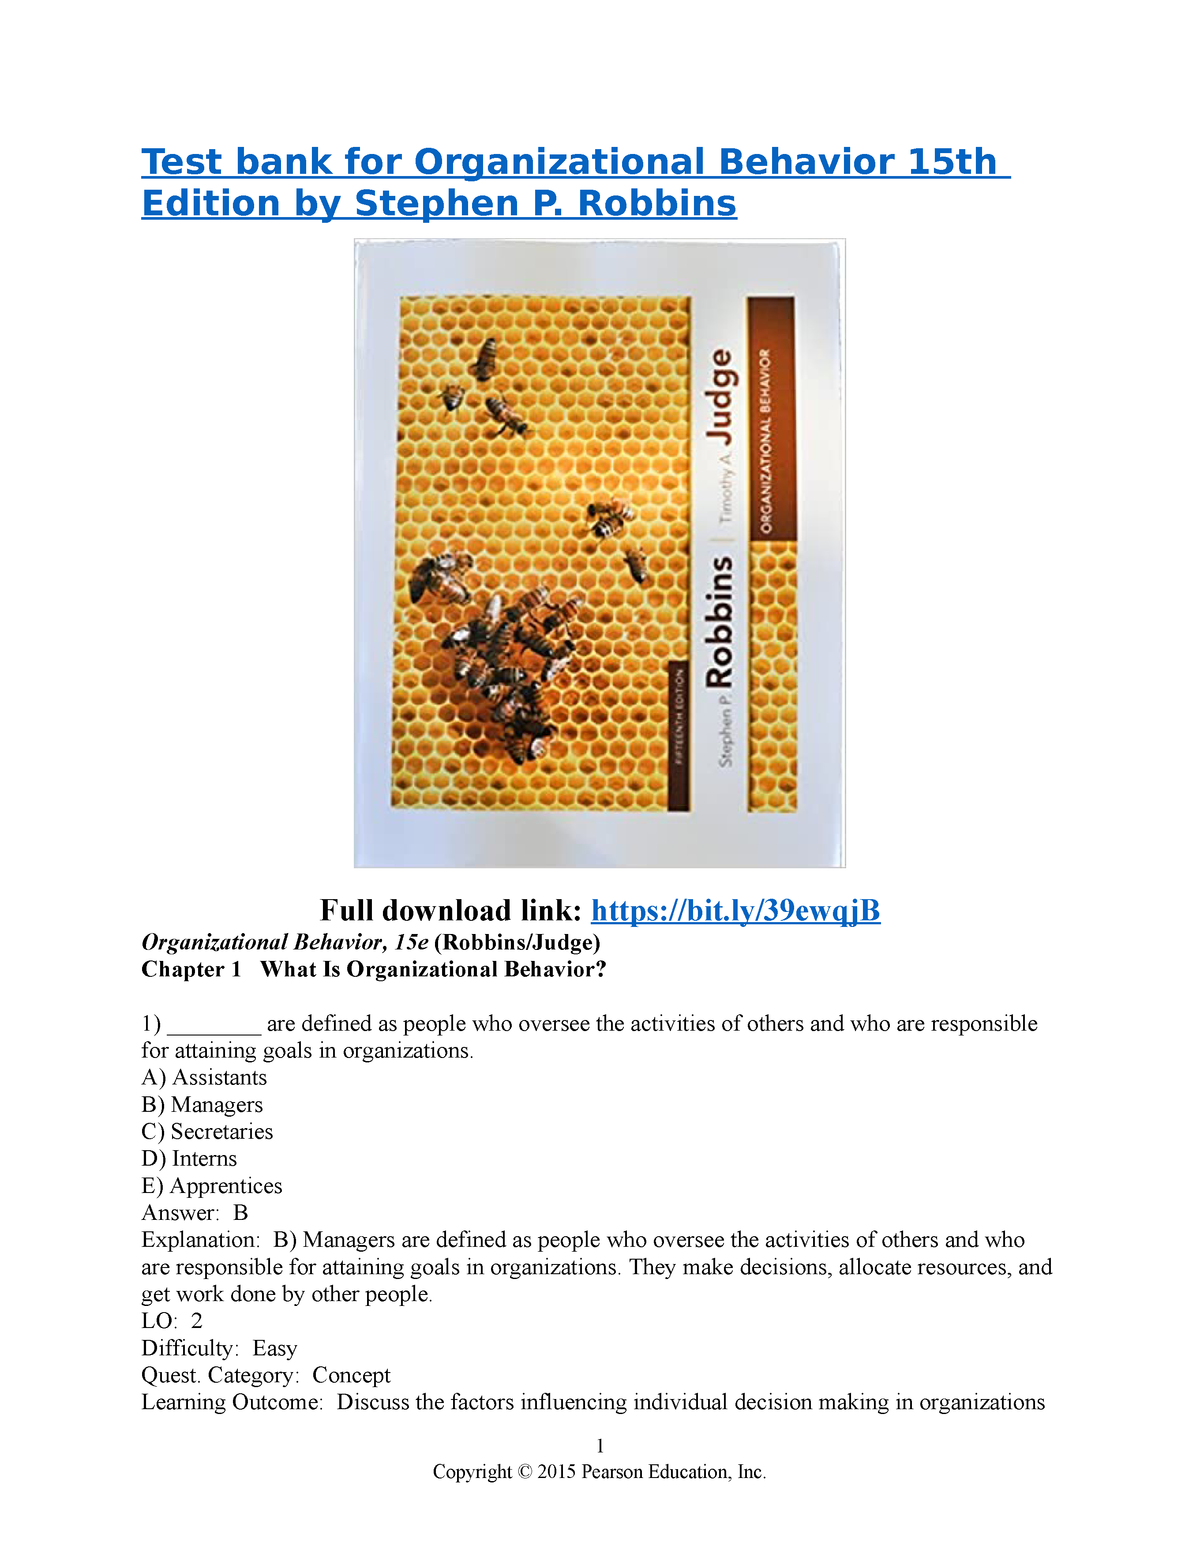 Test bank for Organizational Behavior 15th Edition by Stephen P. Robbins StuDocu